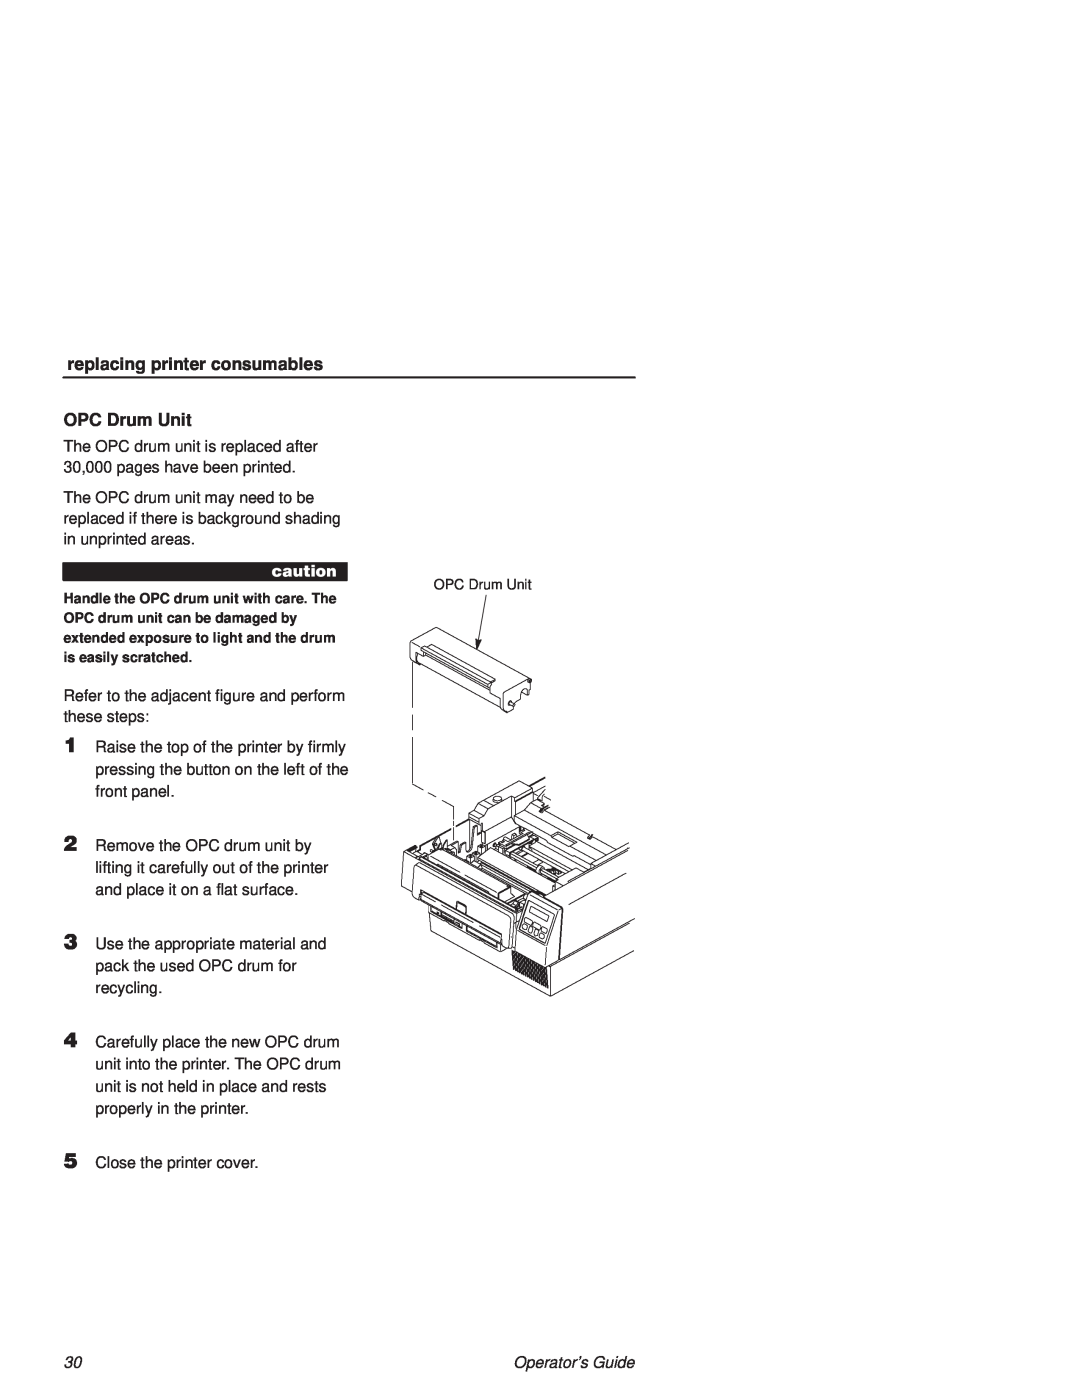 Printronix L1524 manual replacing printer consumables, OPC Drum Unit 